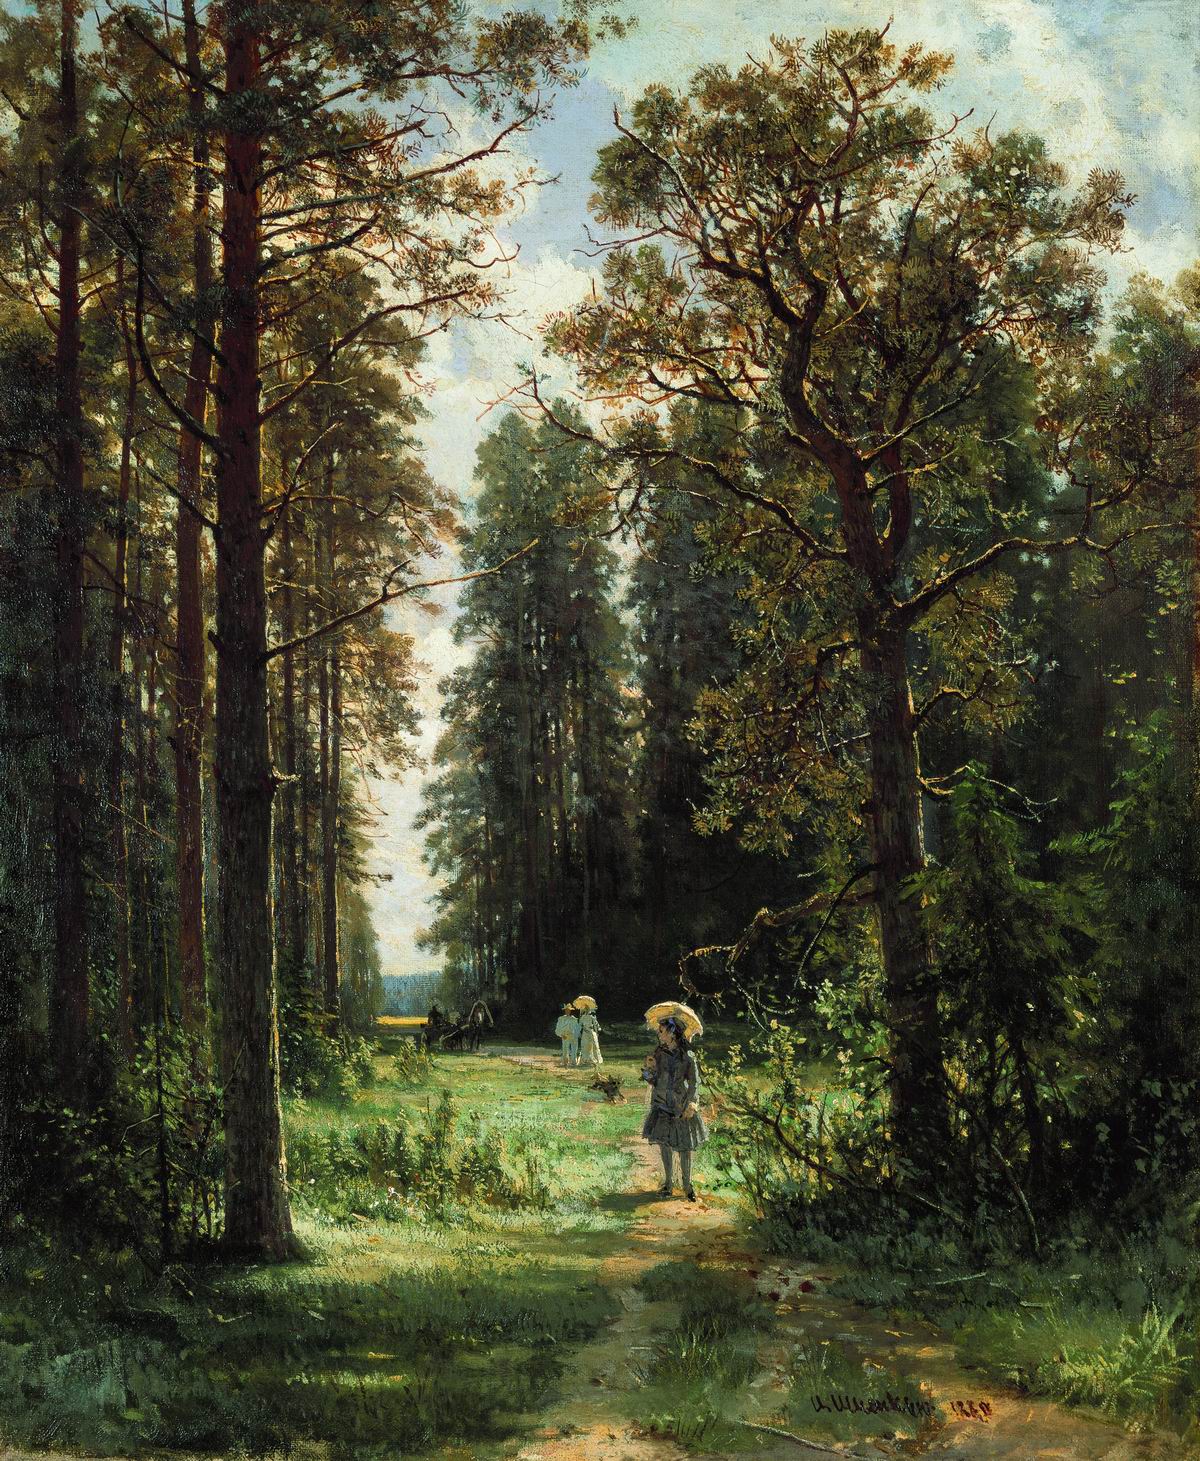 Шишкин. Дорожка в лесу. 1880